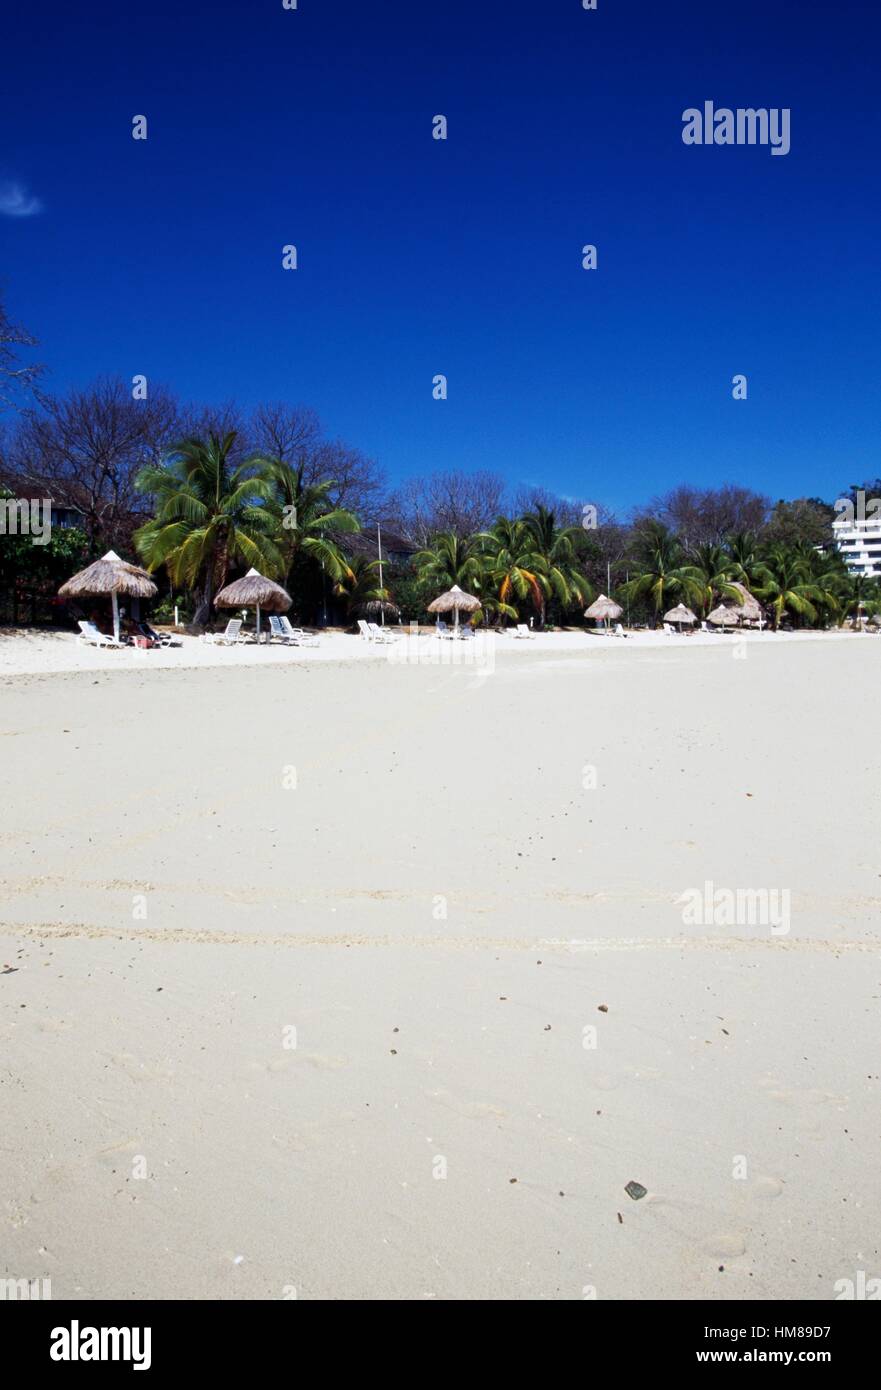 Beach with palm trees and umbrellas on Contadora island, Panama. Stock Photo